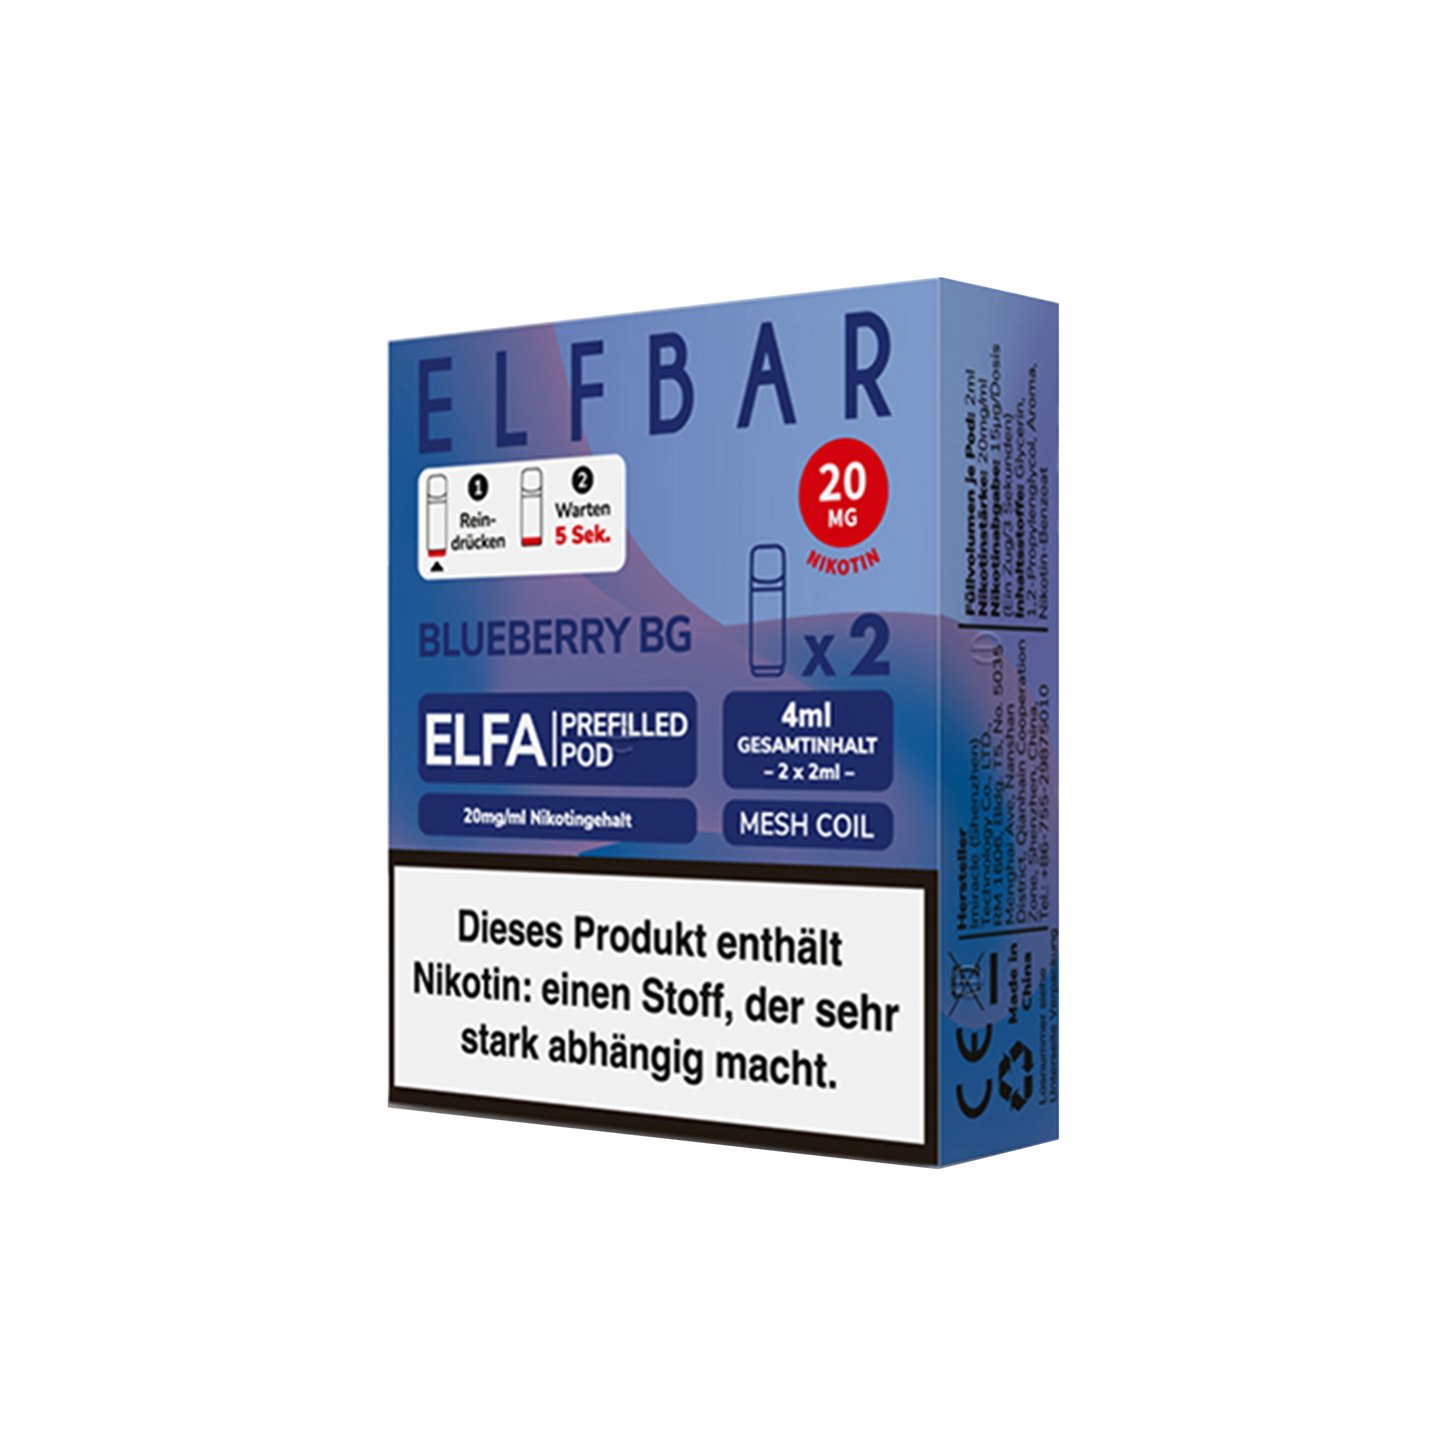 ELFBAR ELFA CP PODS - BLUEBERRY BG 20MG NIKOTIN 2ER PACK (10 STÜCK)